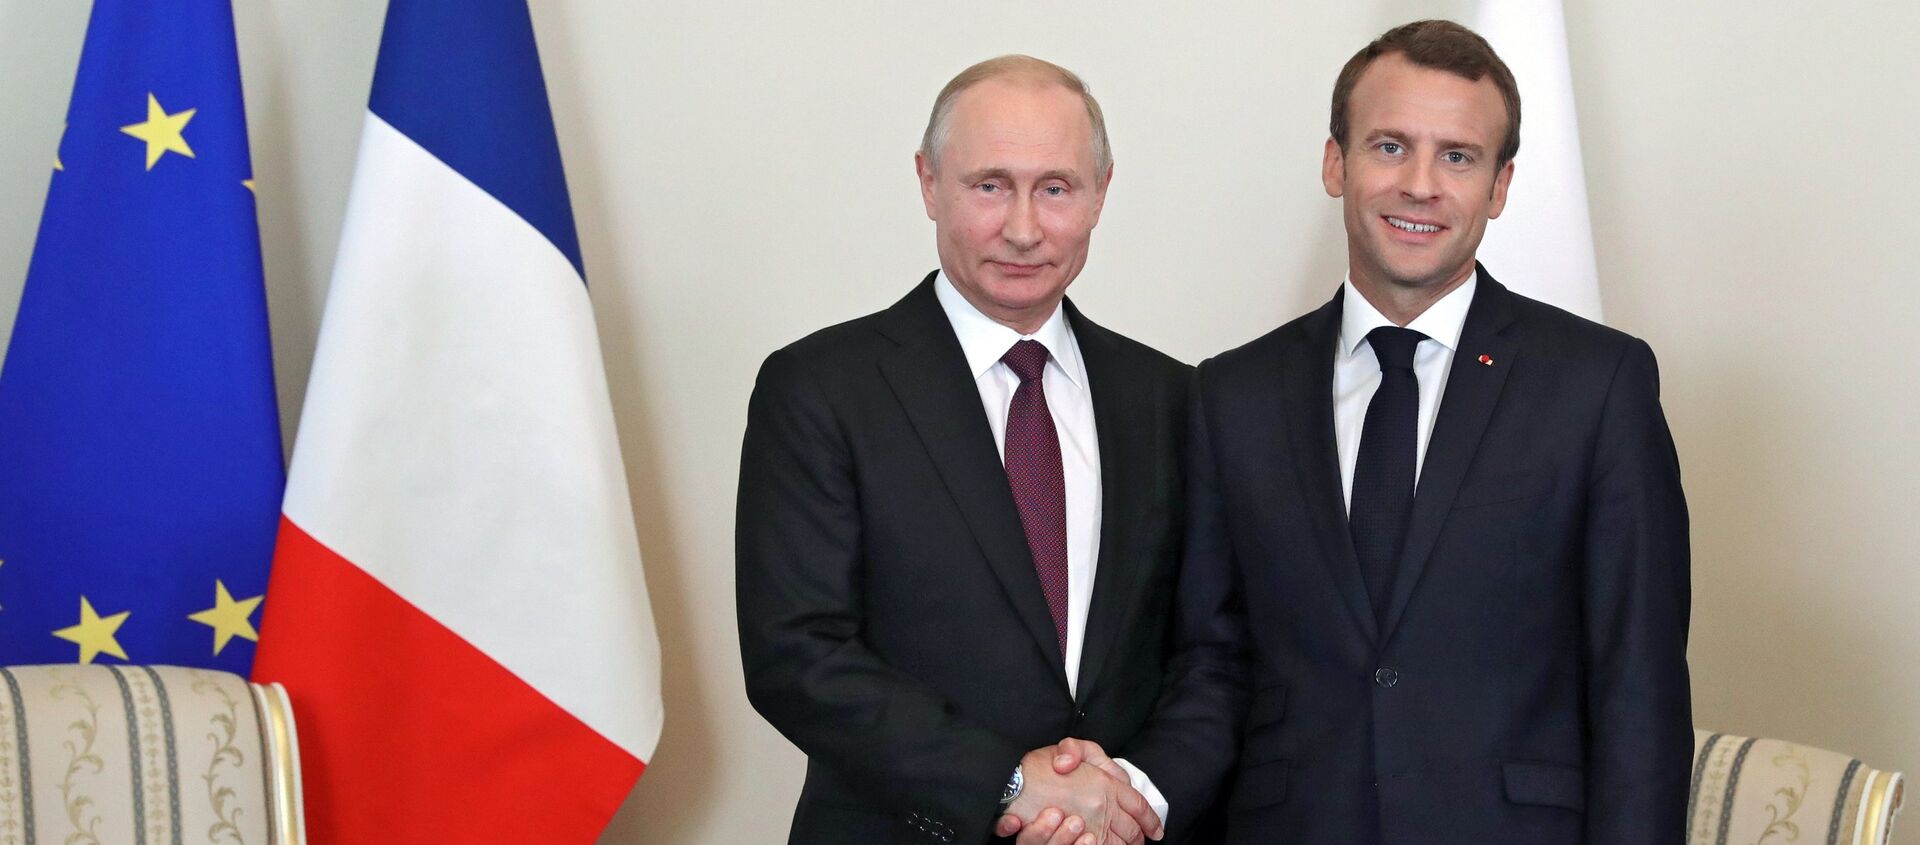 Vladímir Putin, presidente de Rusia, y Emmanuel Macron, presidente de Francia - Sputnik Mundo, 1920, 10.02.2021